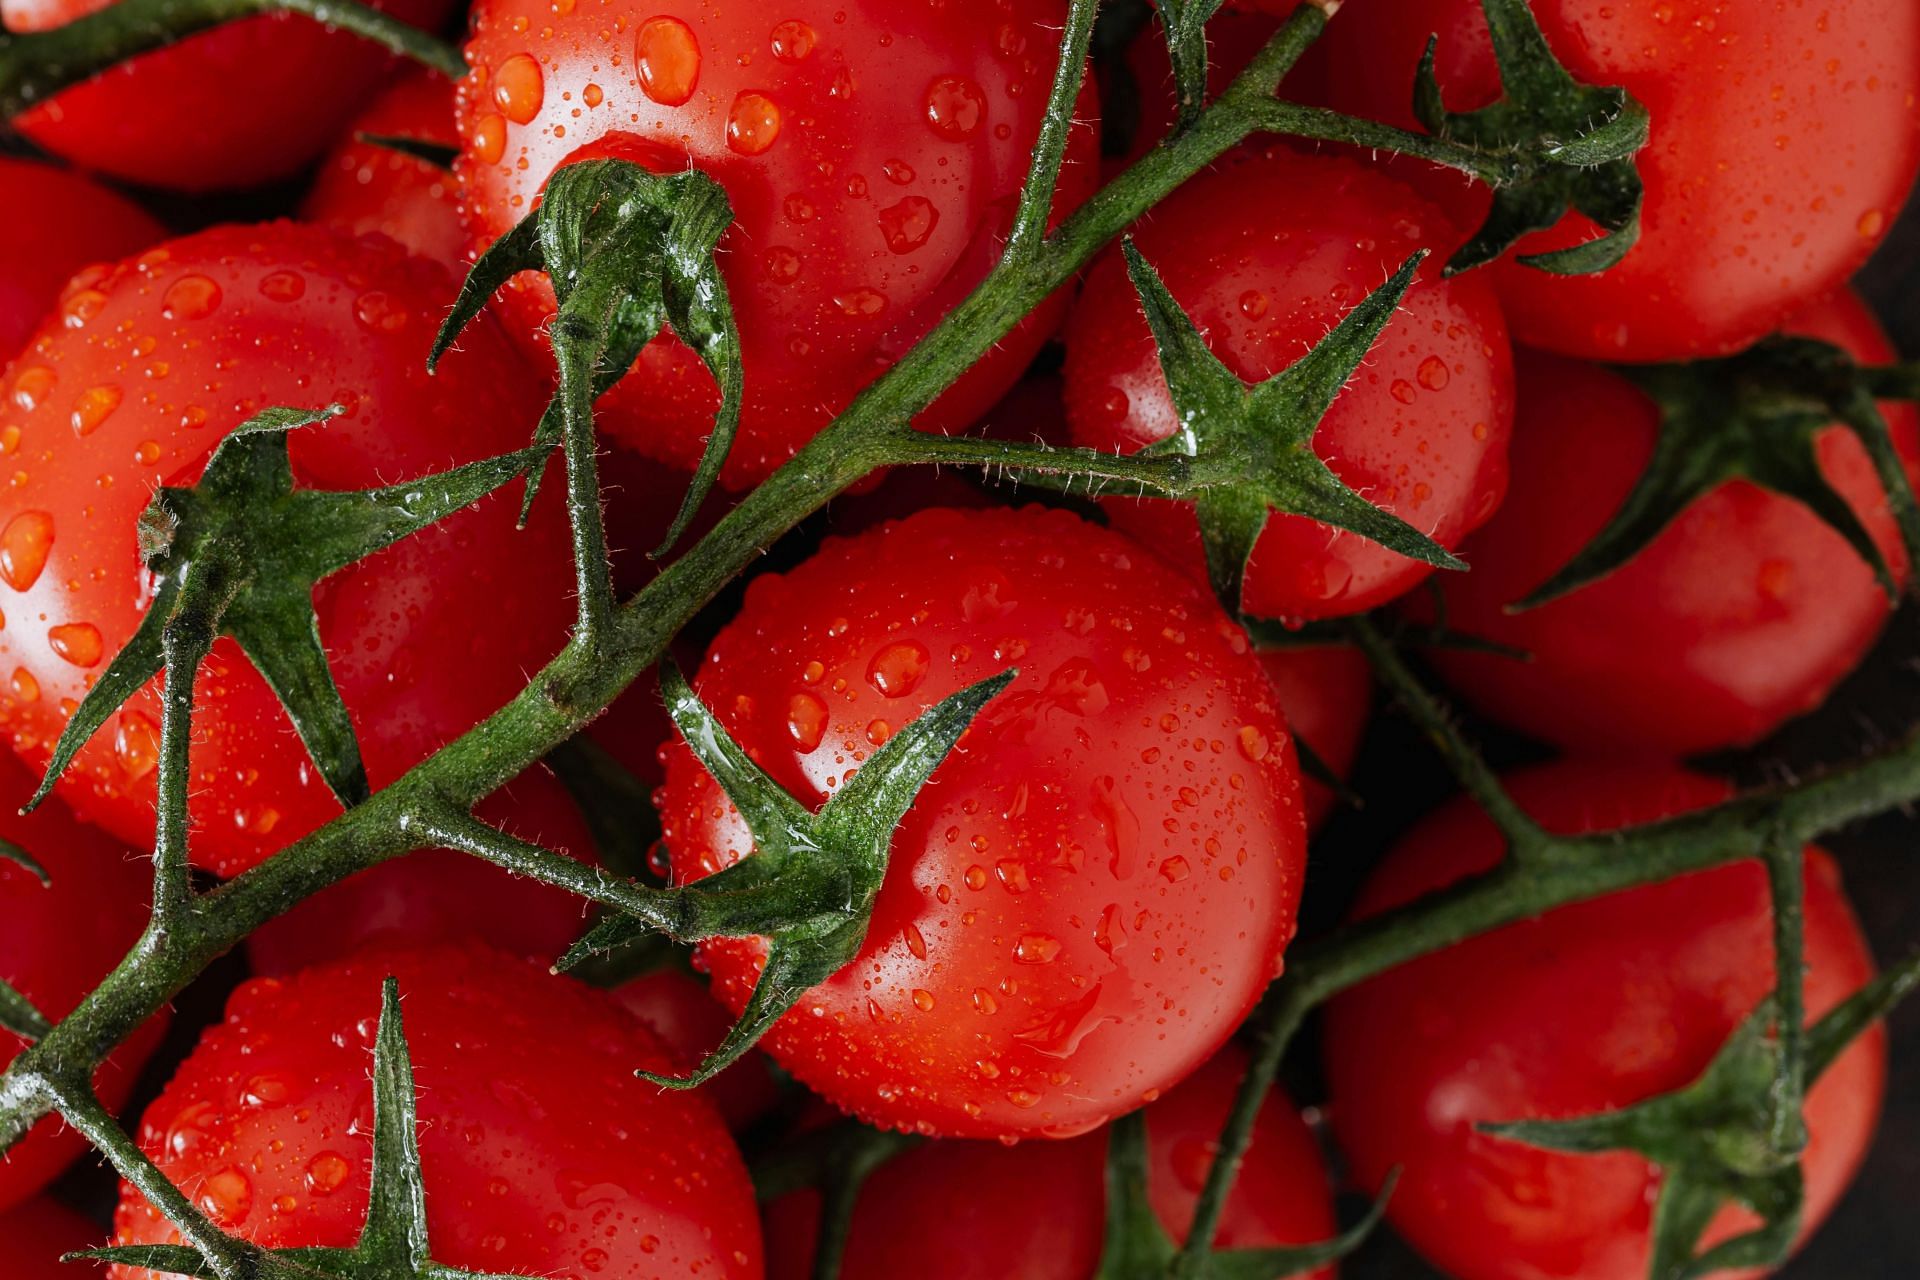 Importance of tomato juice benefits (image sourced via Pexels / Photo by karolina)